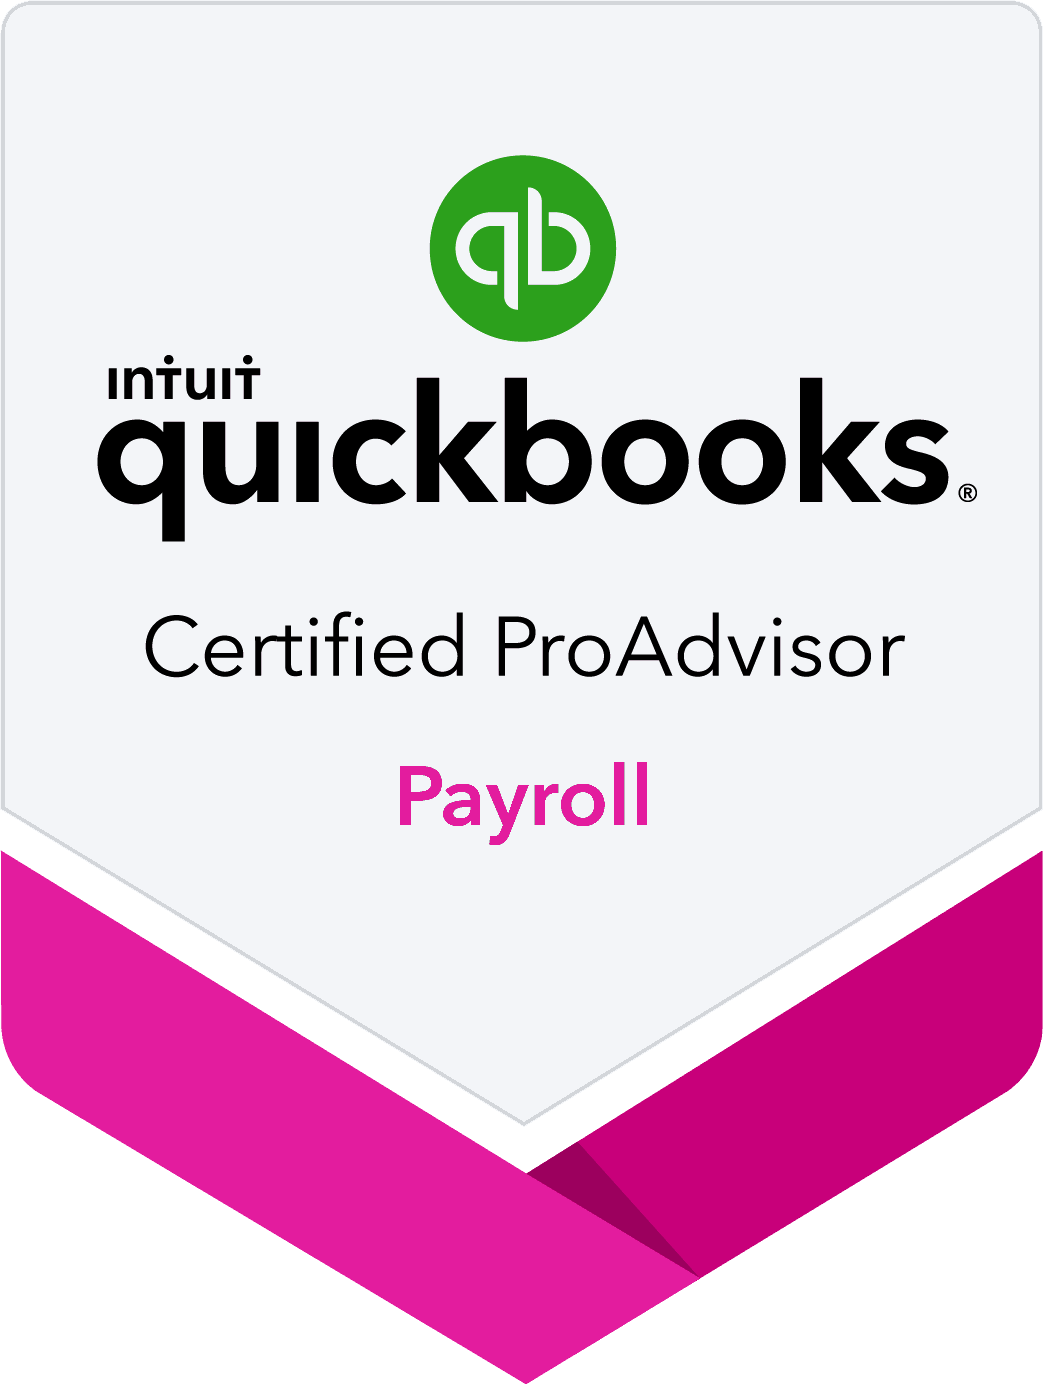 Ana Echeveri is a Certified QuickBooks ProAvisor Payroll